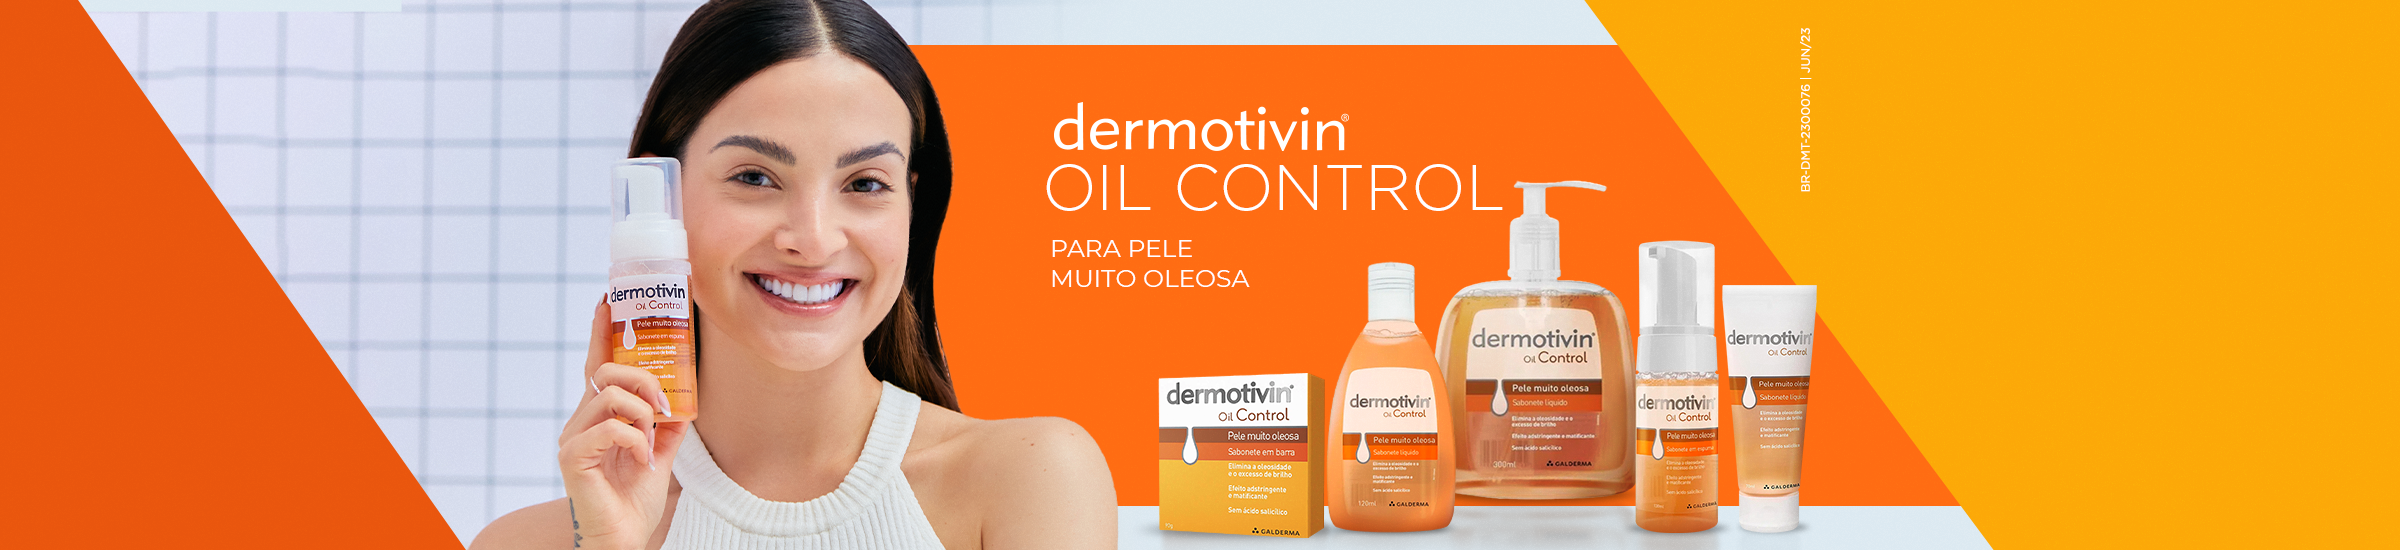 Dermotivin Oil Control para pele muito oleosa